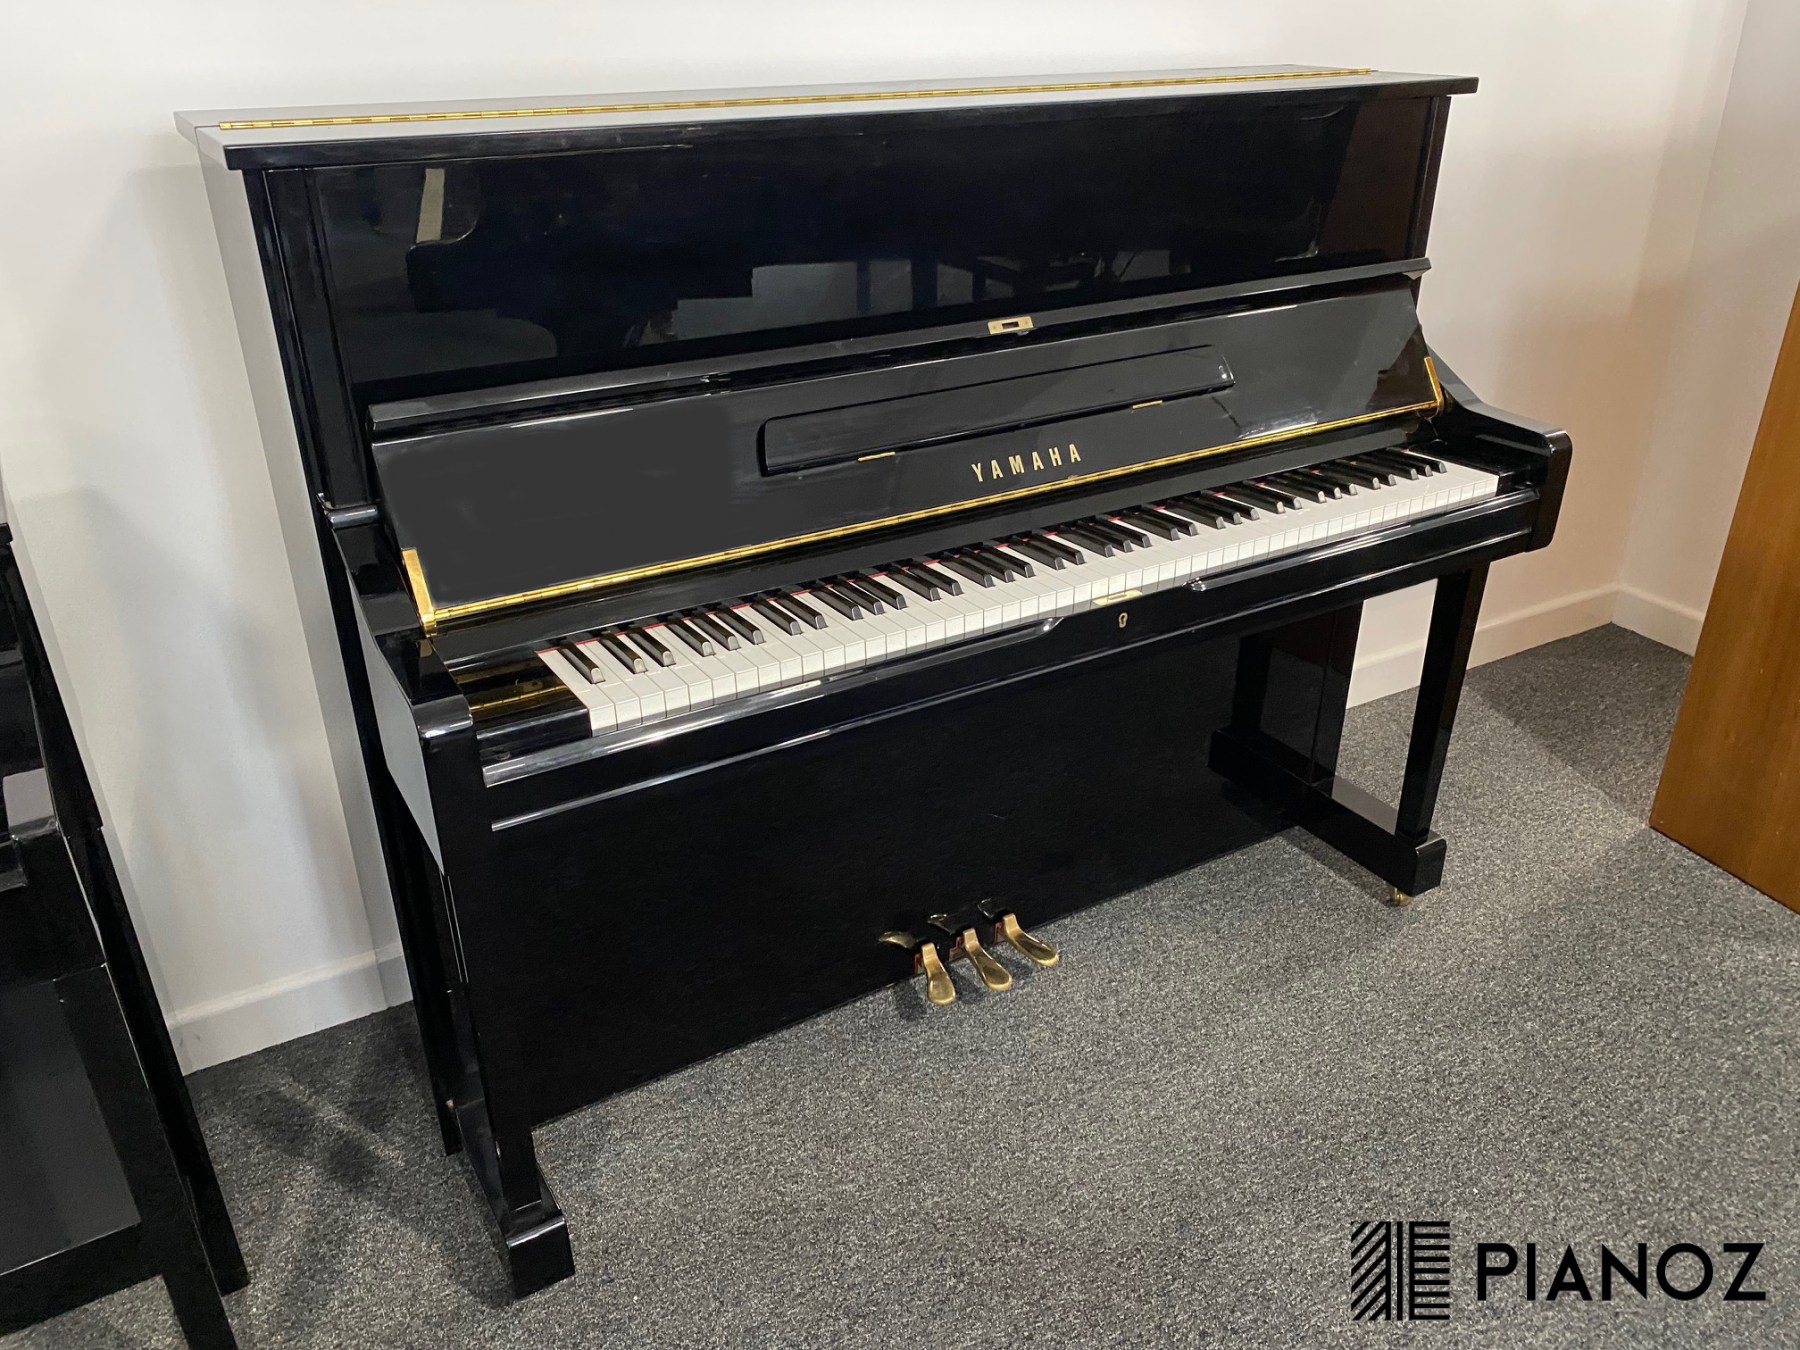 Yamaha U1 2007 Upright Piano piano for sale in UK